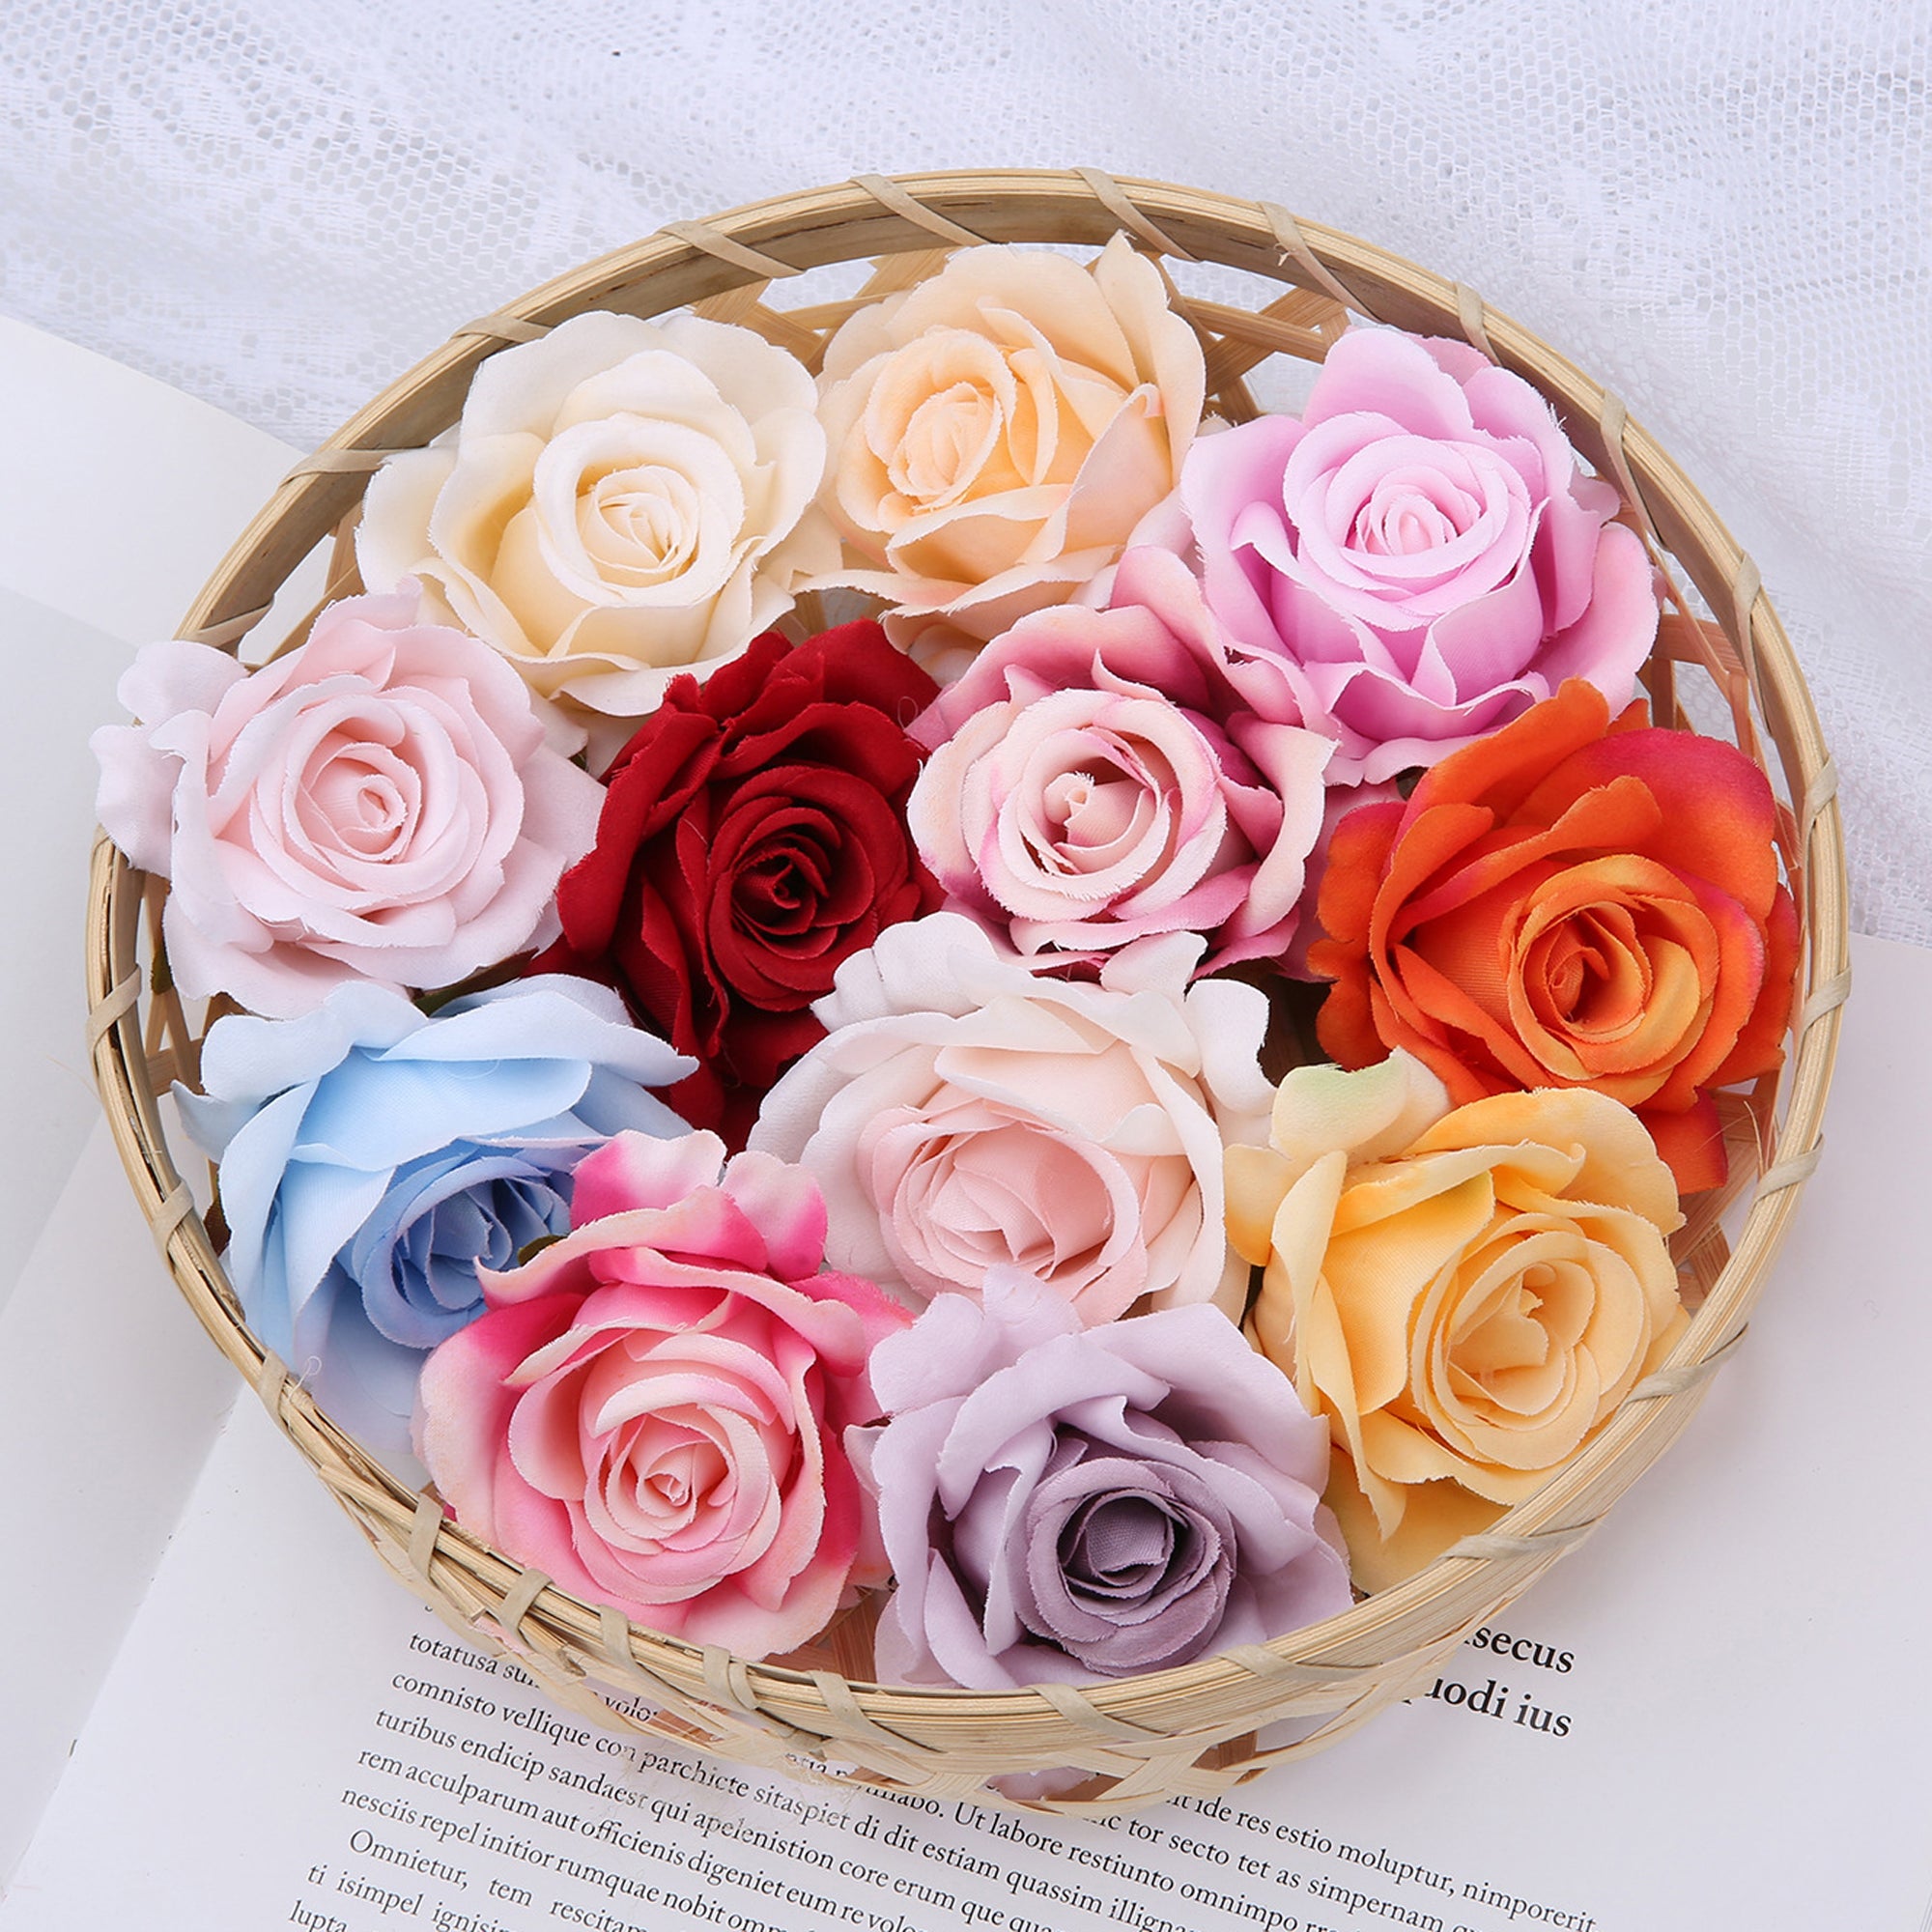 Artificial Small Roses Bulk Silk Flowers